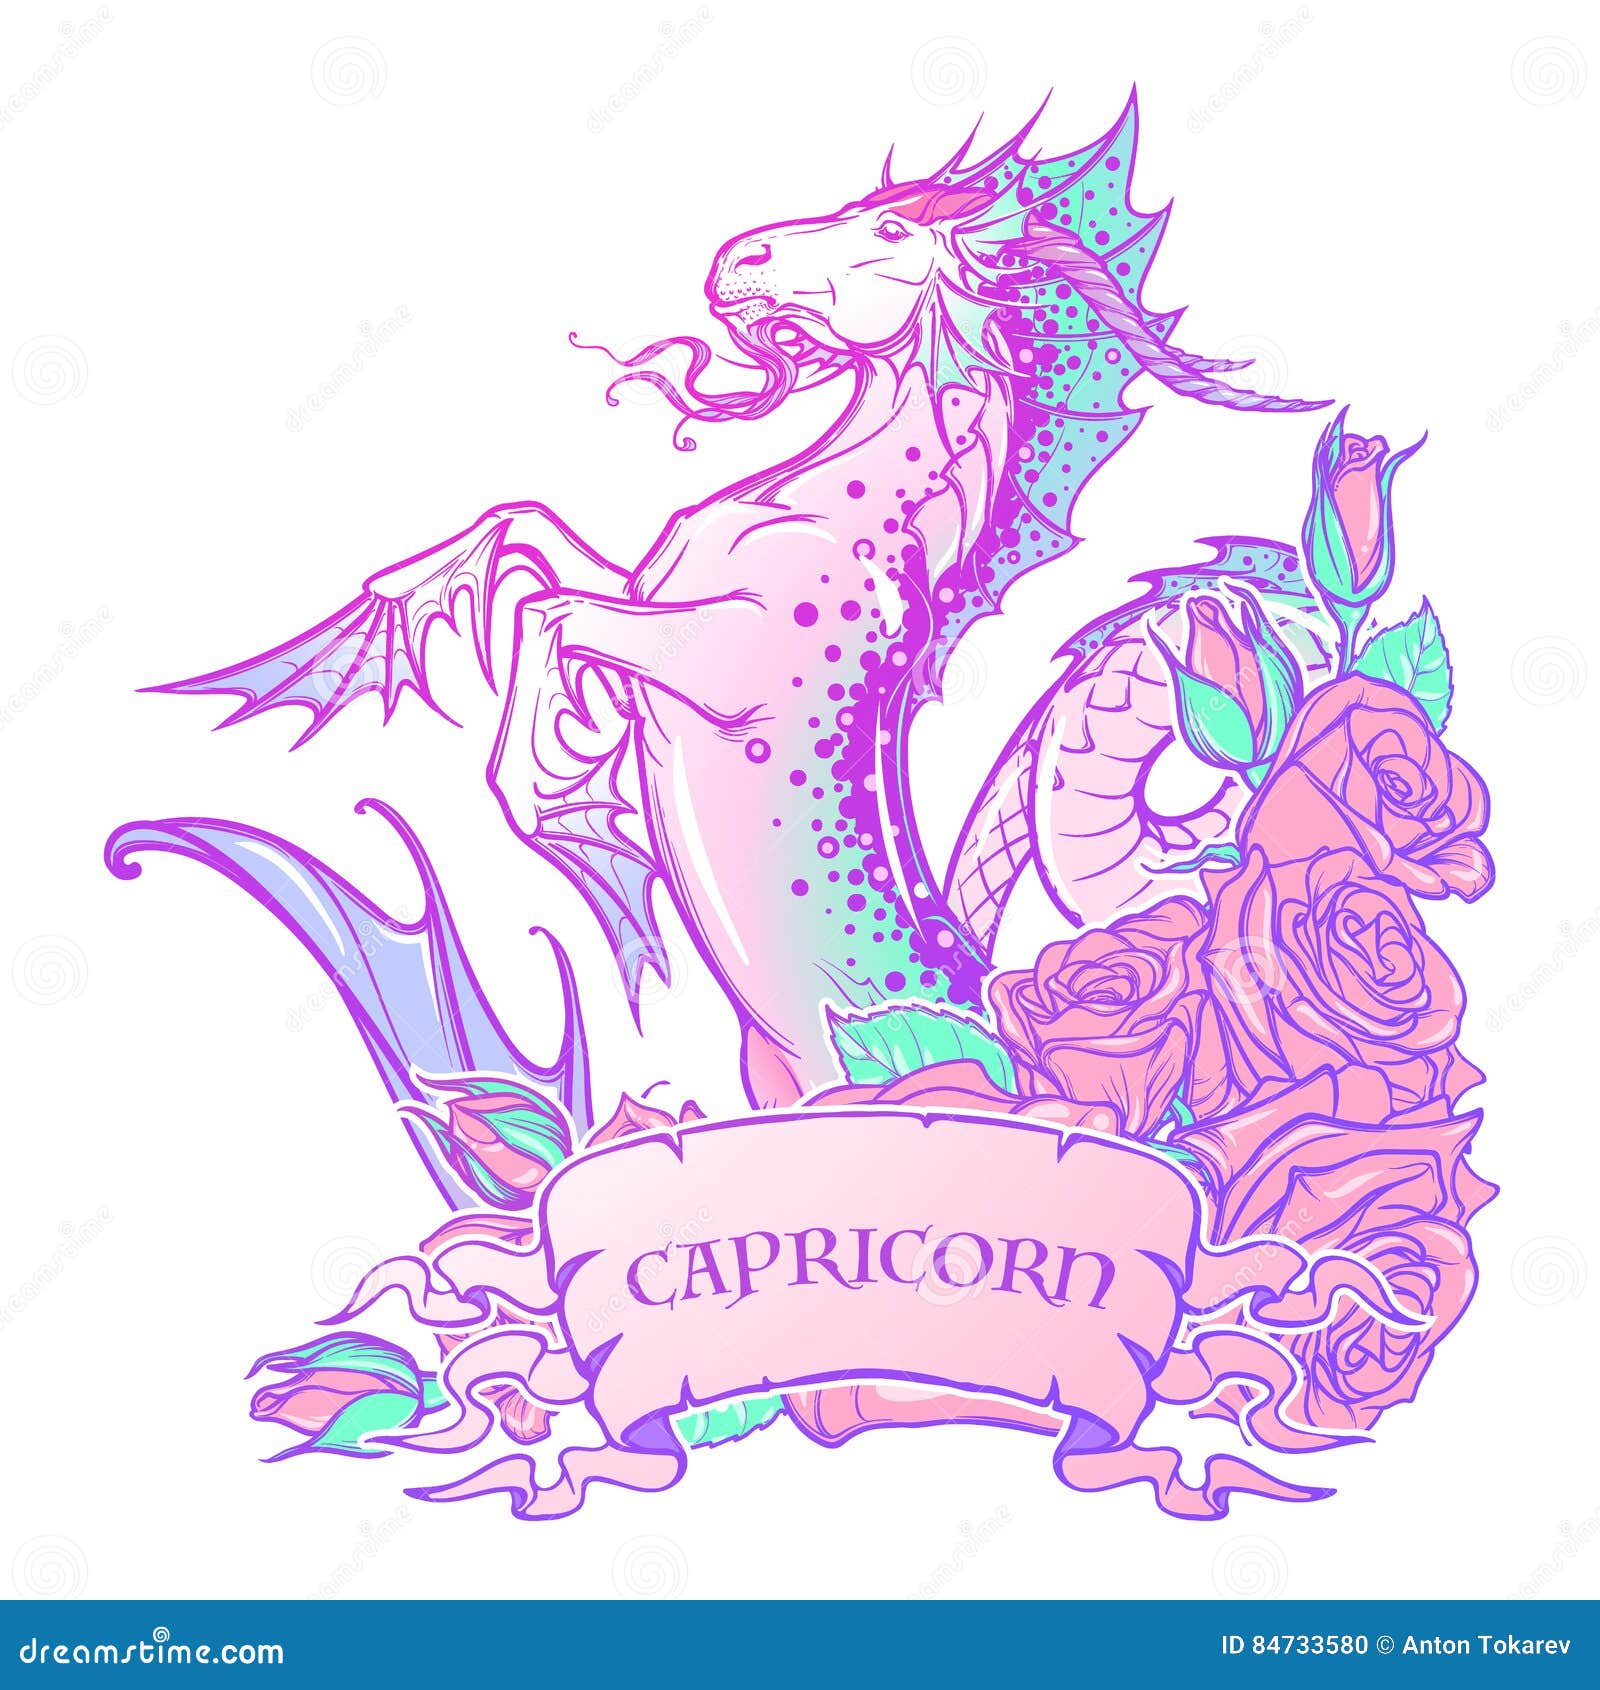 zodiac sign capricorn. pastel colors